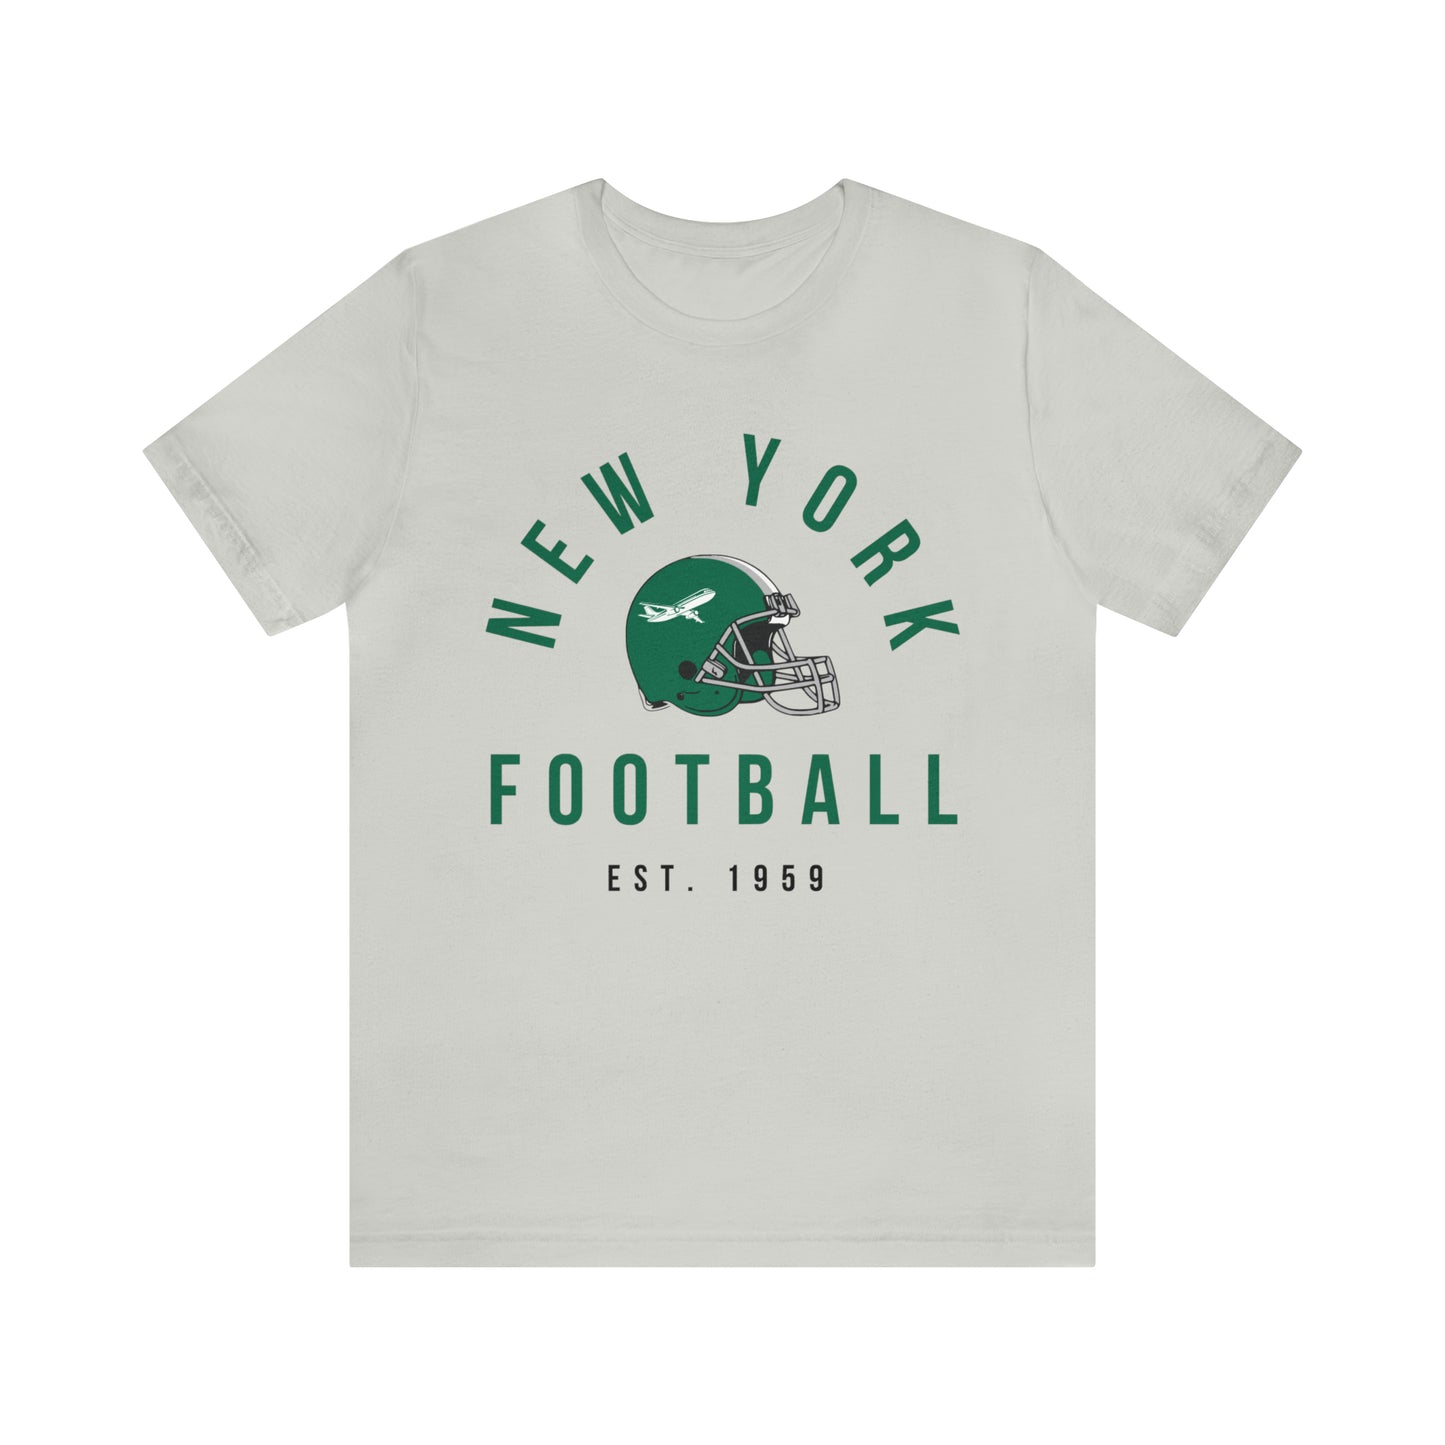 Vintage New York Jets Football Tee - Retro Football T-Shirt Apparel - Men's & Women's Unisex Sizing